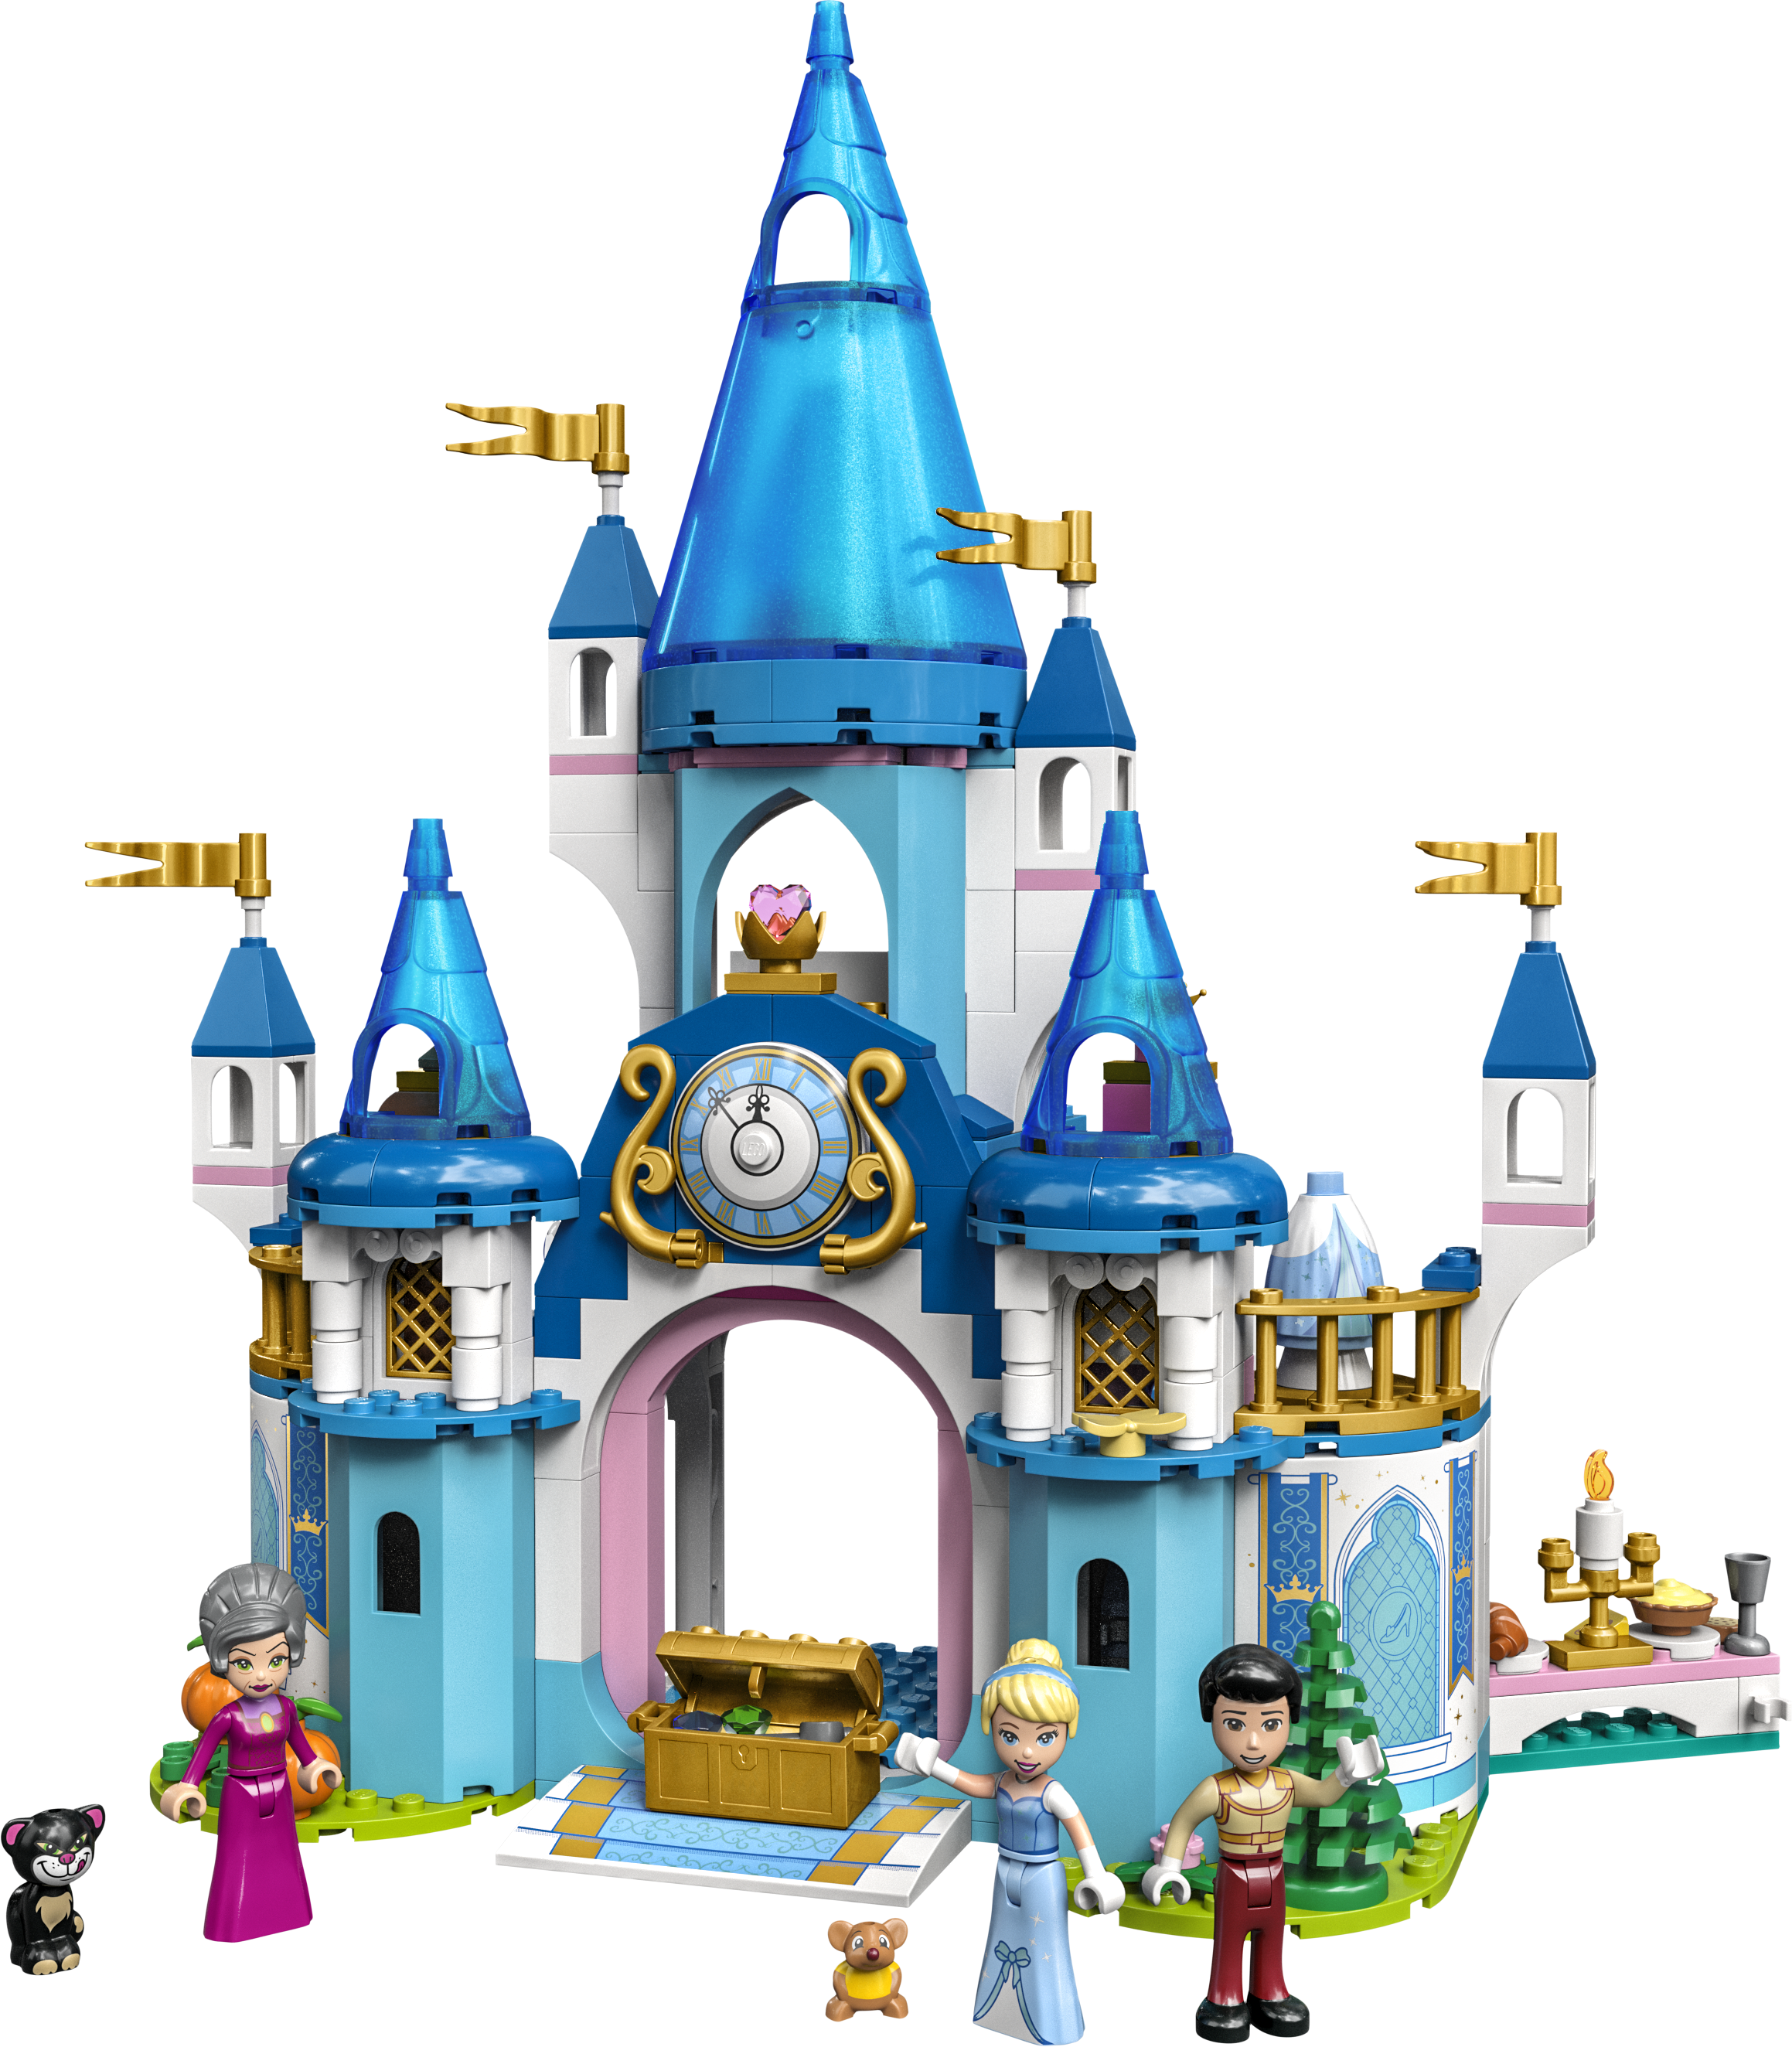 LEGO® Disney Princess 43206 Cinderellas Schloss